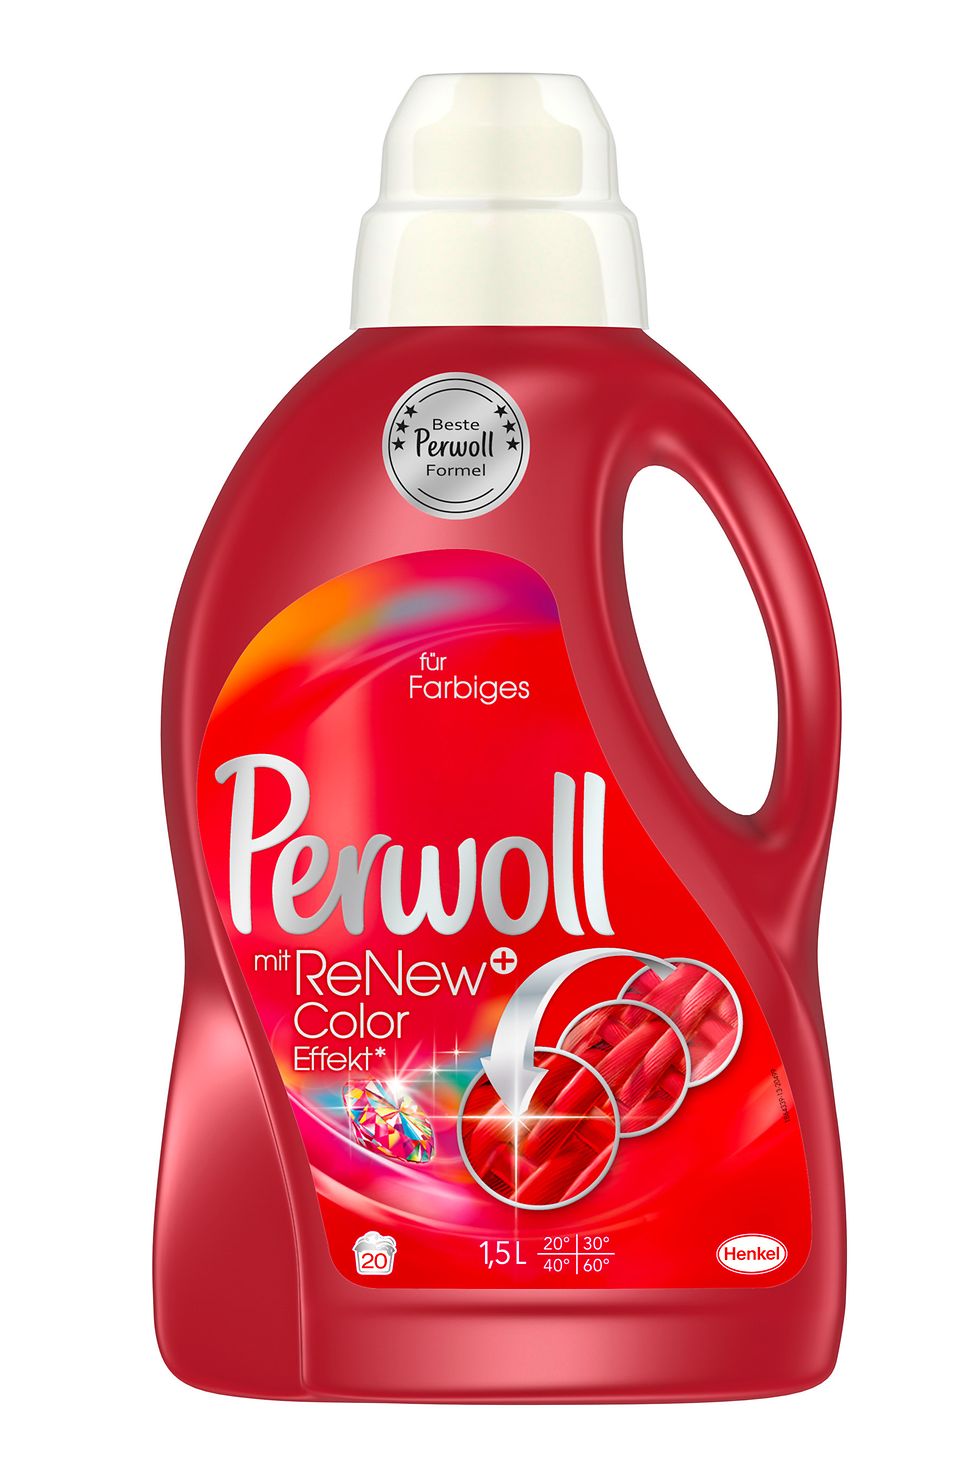 Perwoll ReNew Plus Color-Effekt